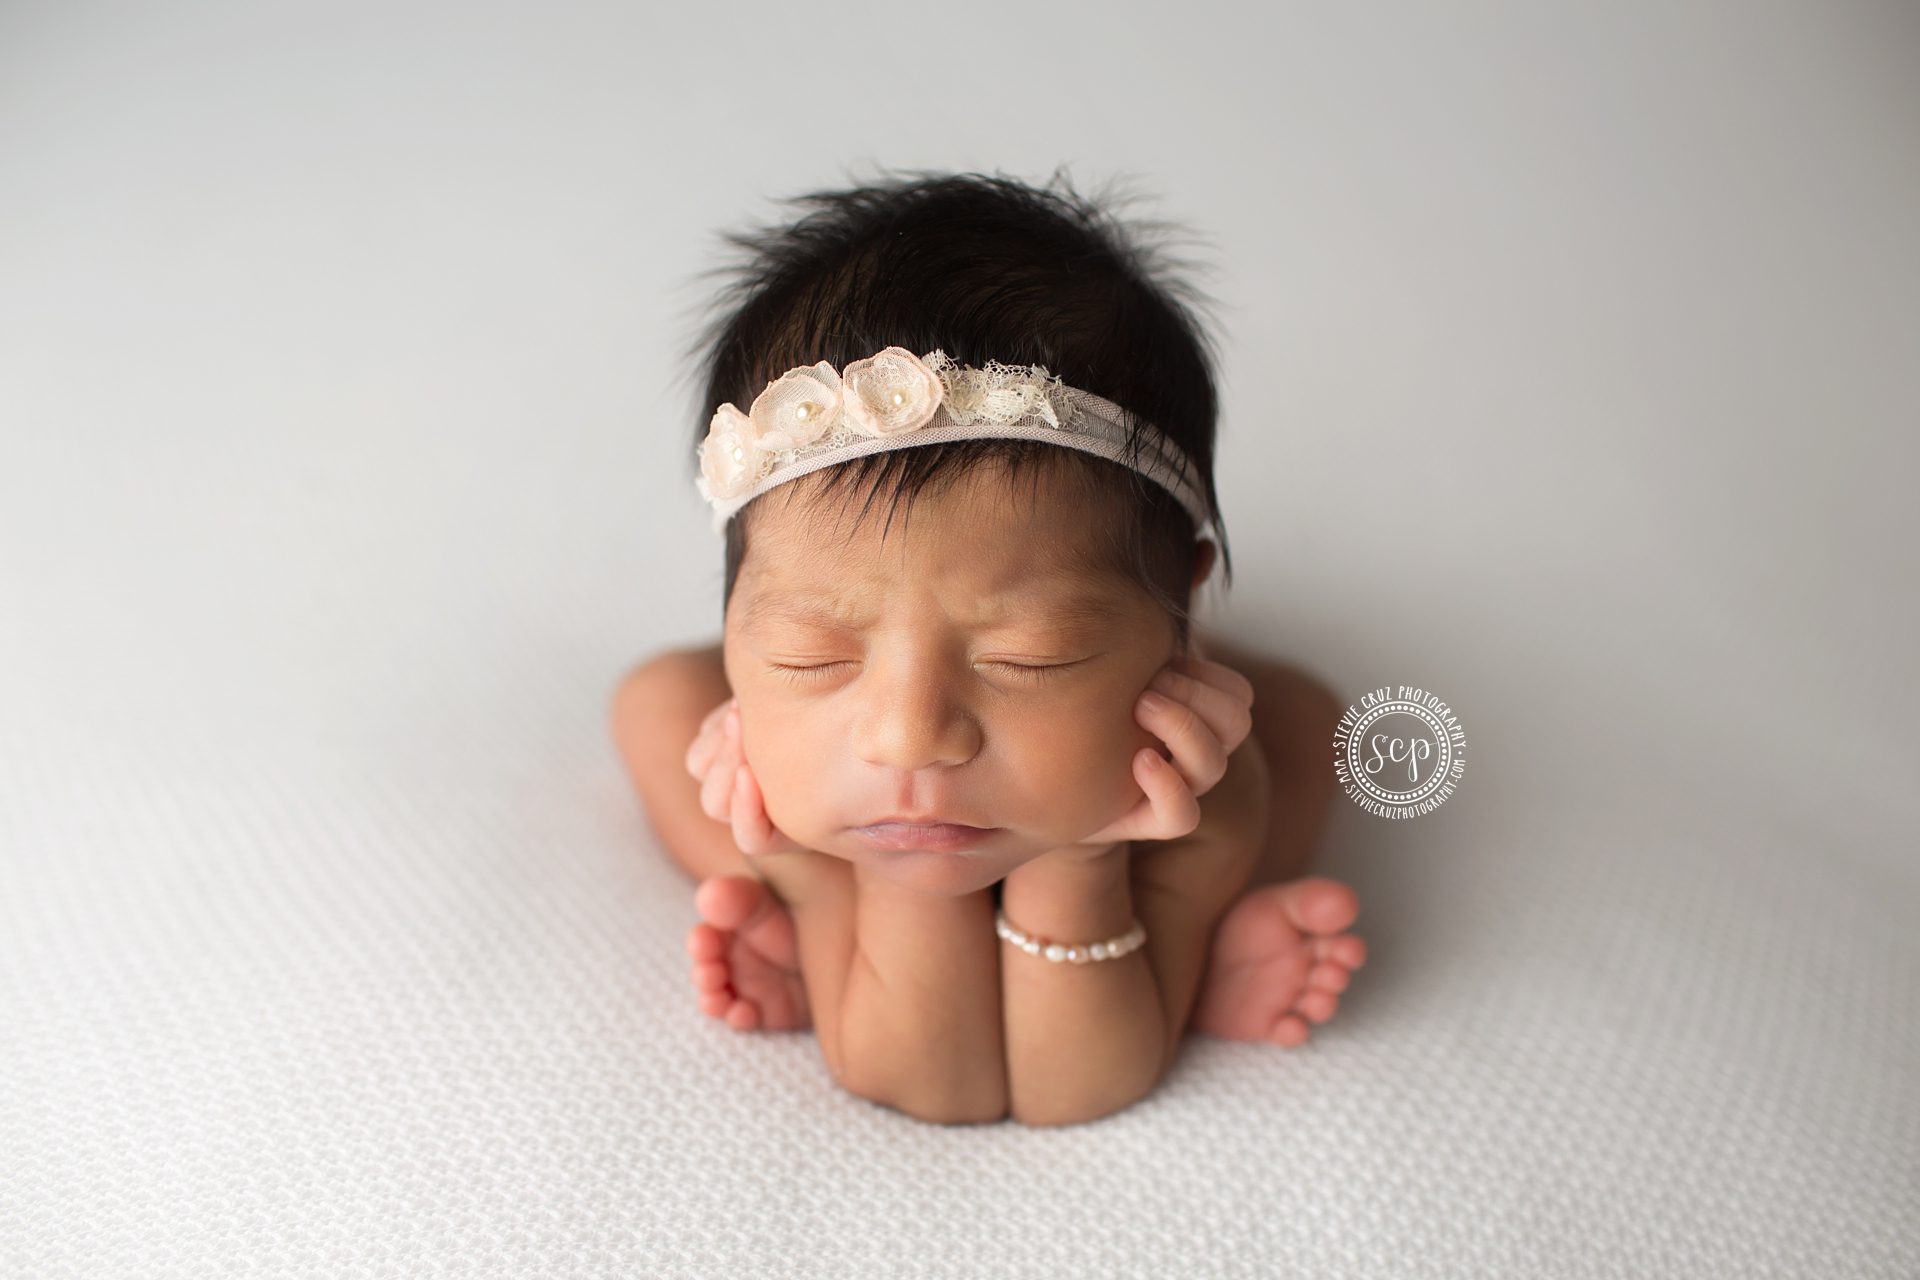 Yorba Linda newborn baby photographer captures precious sleeping baby pose